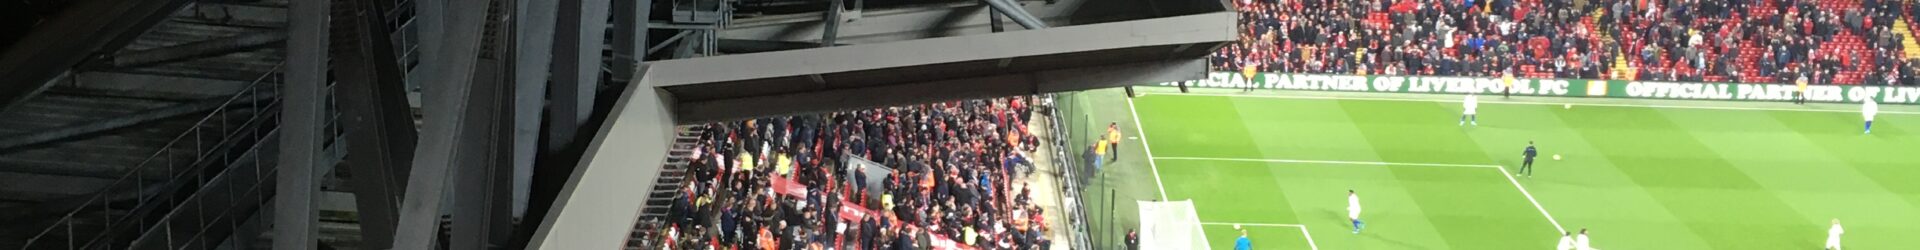 Supporters kennen de voorwaarden om Anfield binnen te mogen